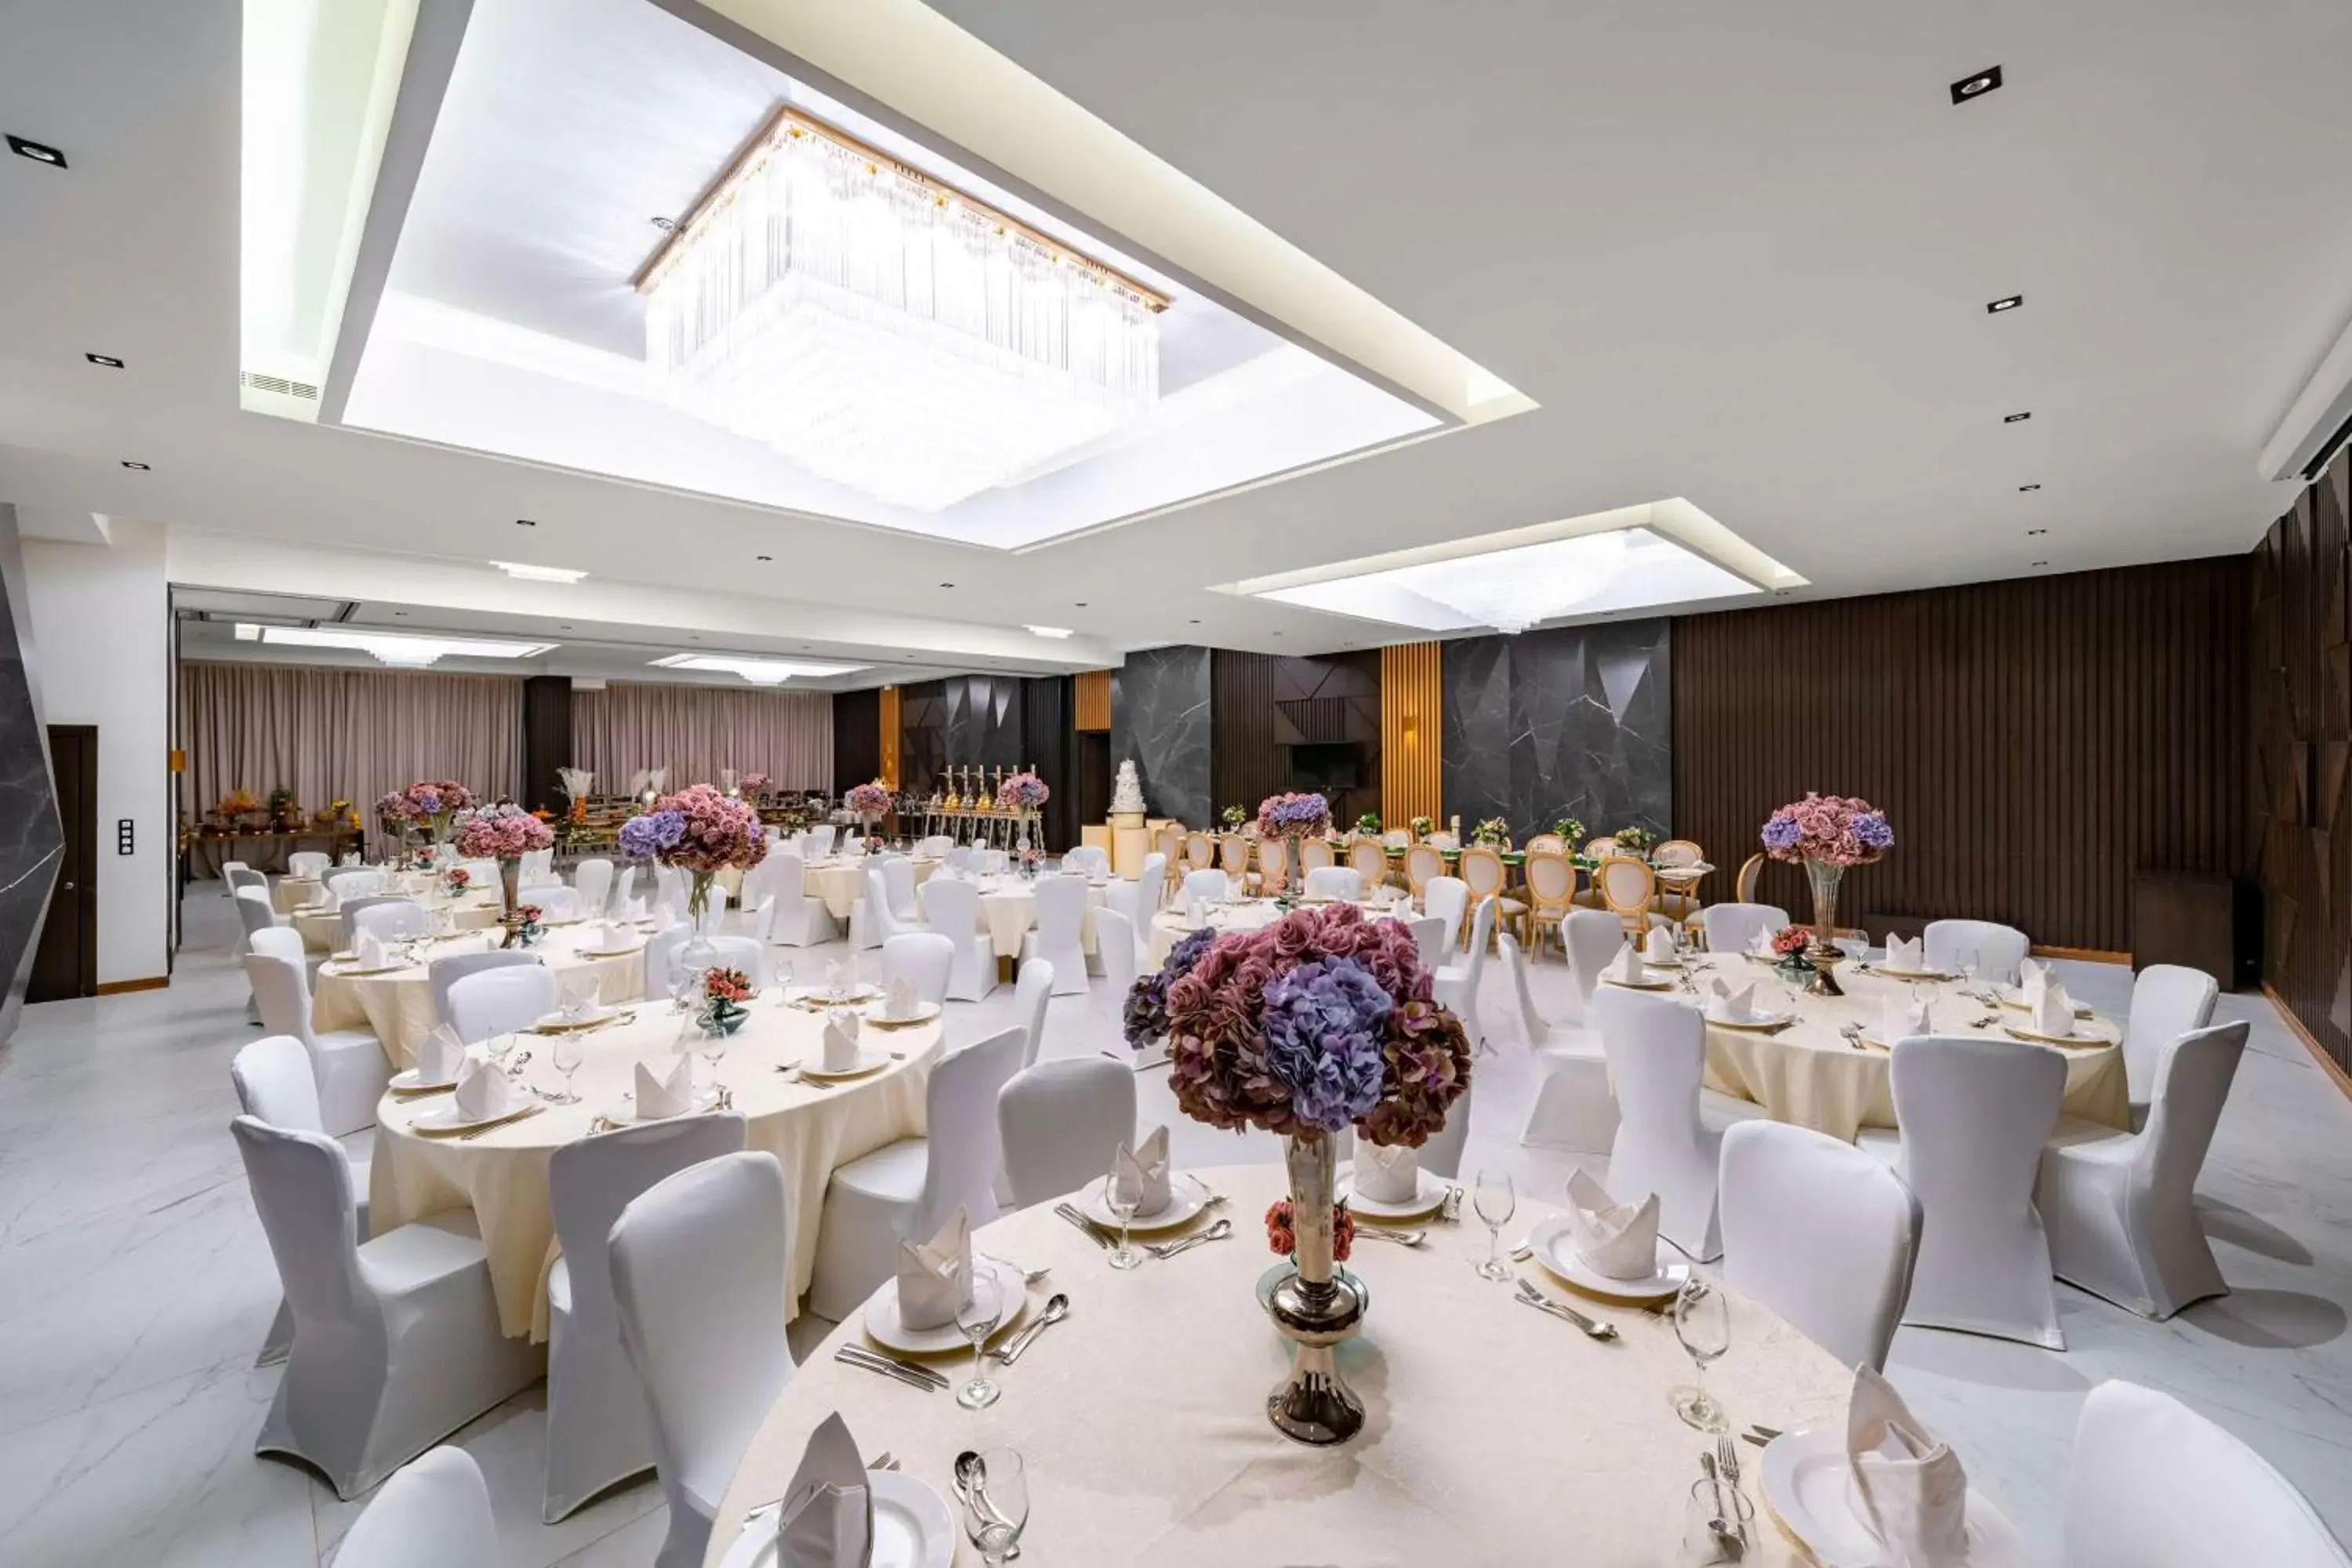 Meeting/conference room, Banquet Facilities in Radisson Blu Hotel Riyadh Qurtuba